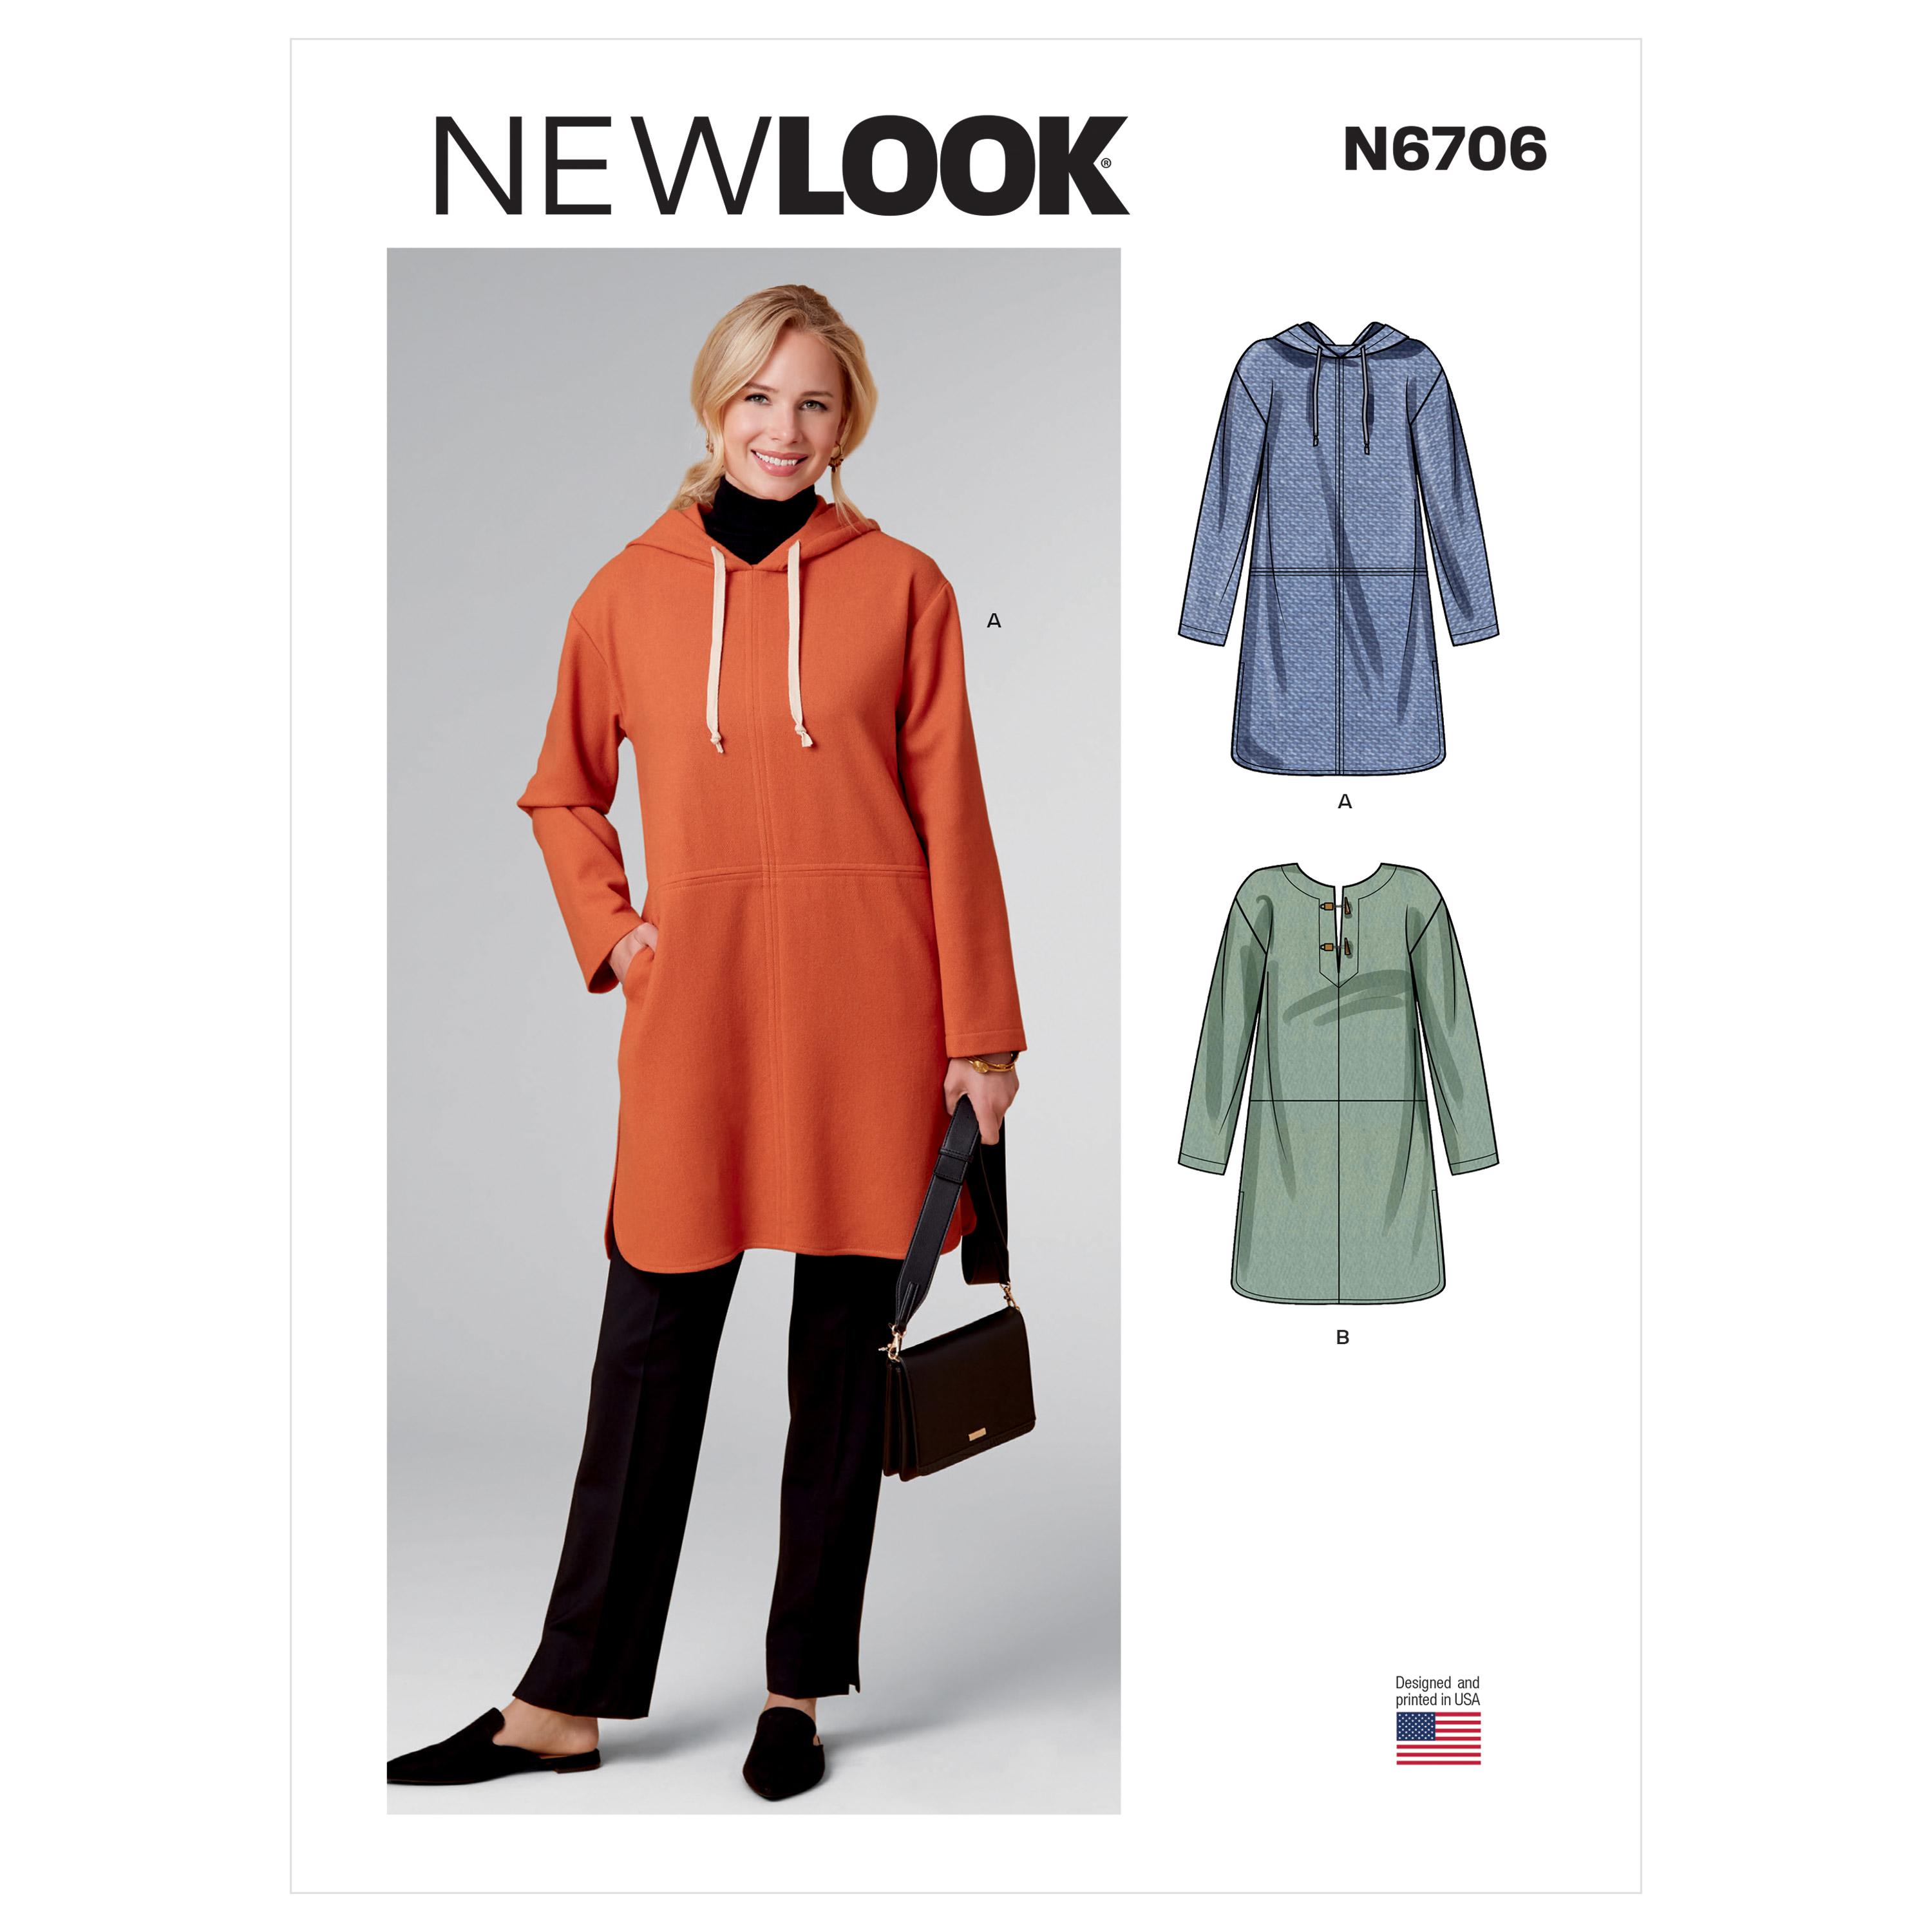 New Look Sewing Pattern N6706 Misses' Jackets